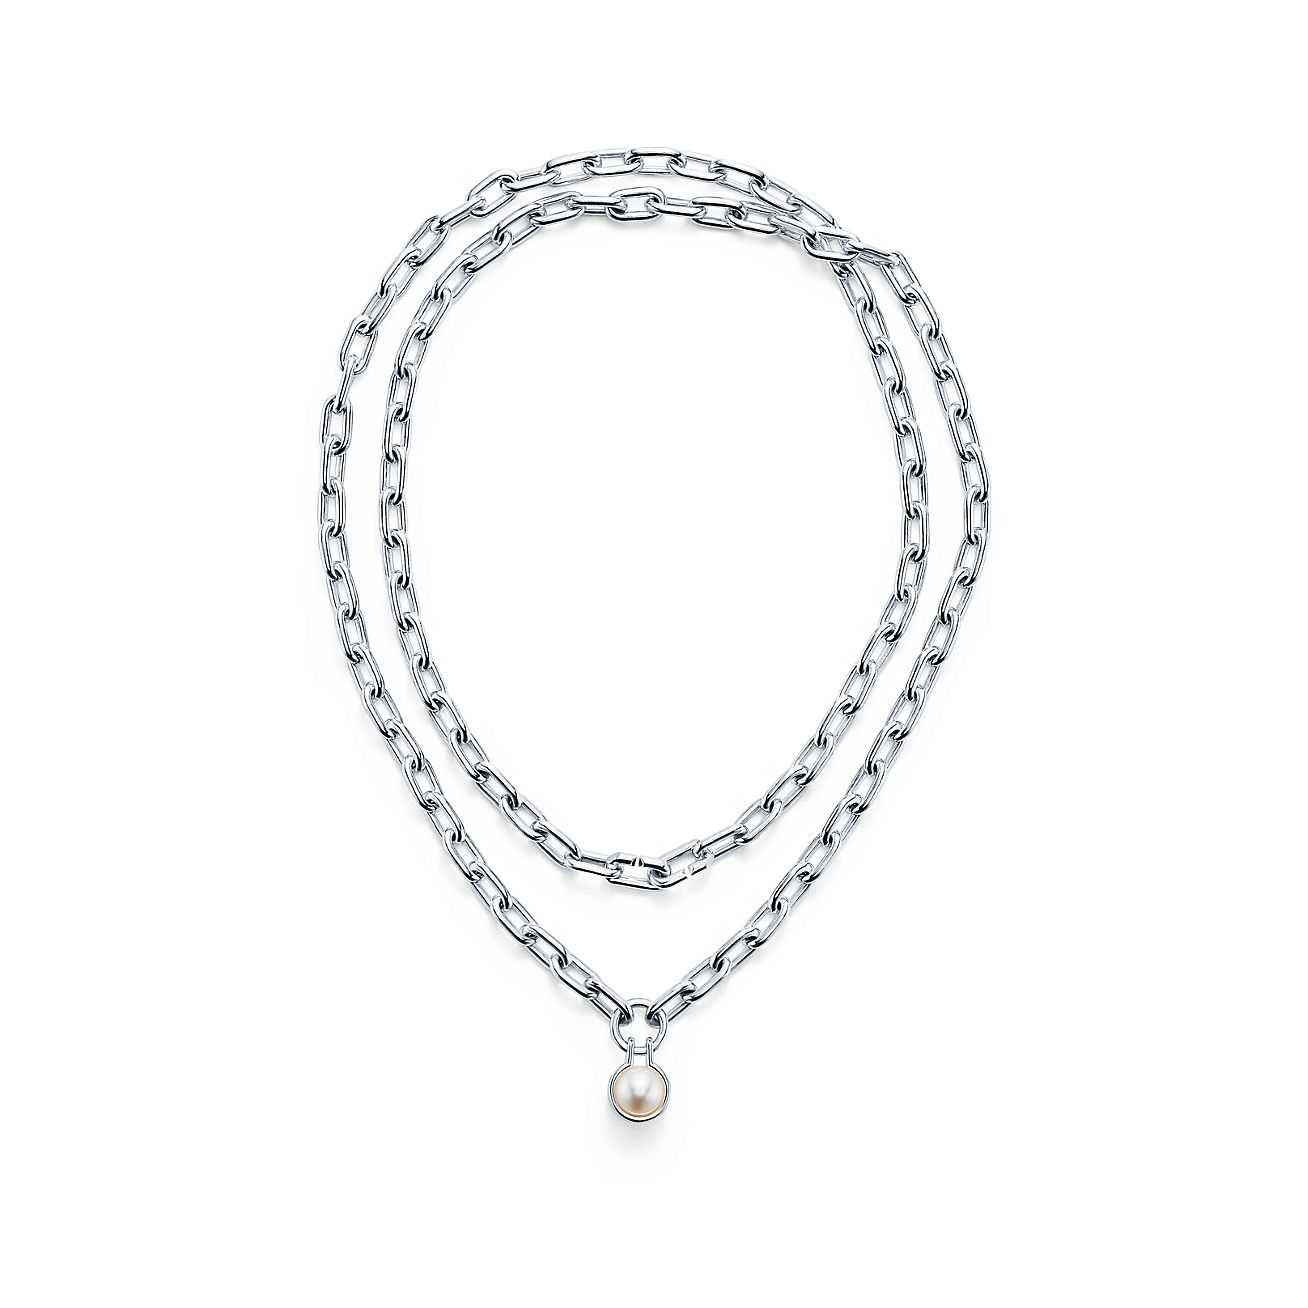 Tiffany HardWear Freshwater Pearl Necklace in Sterling Silver, 32"